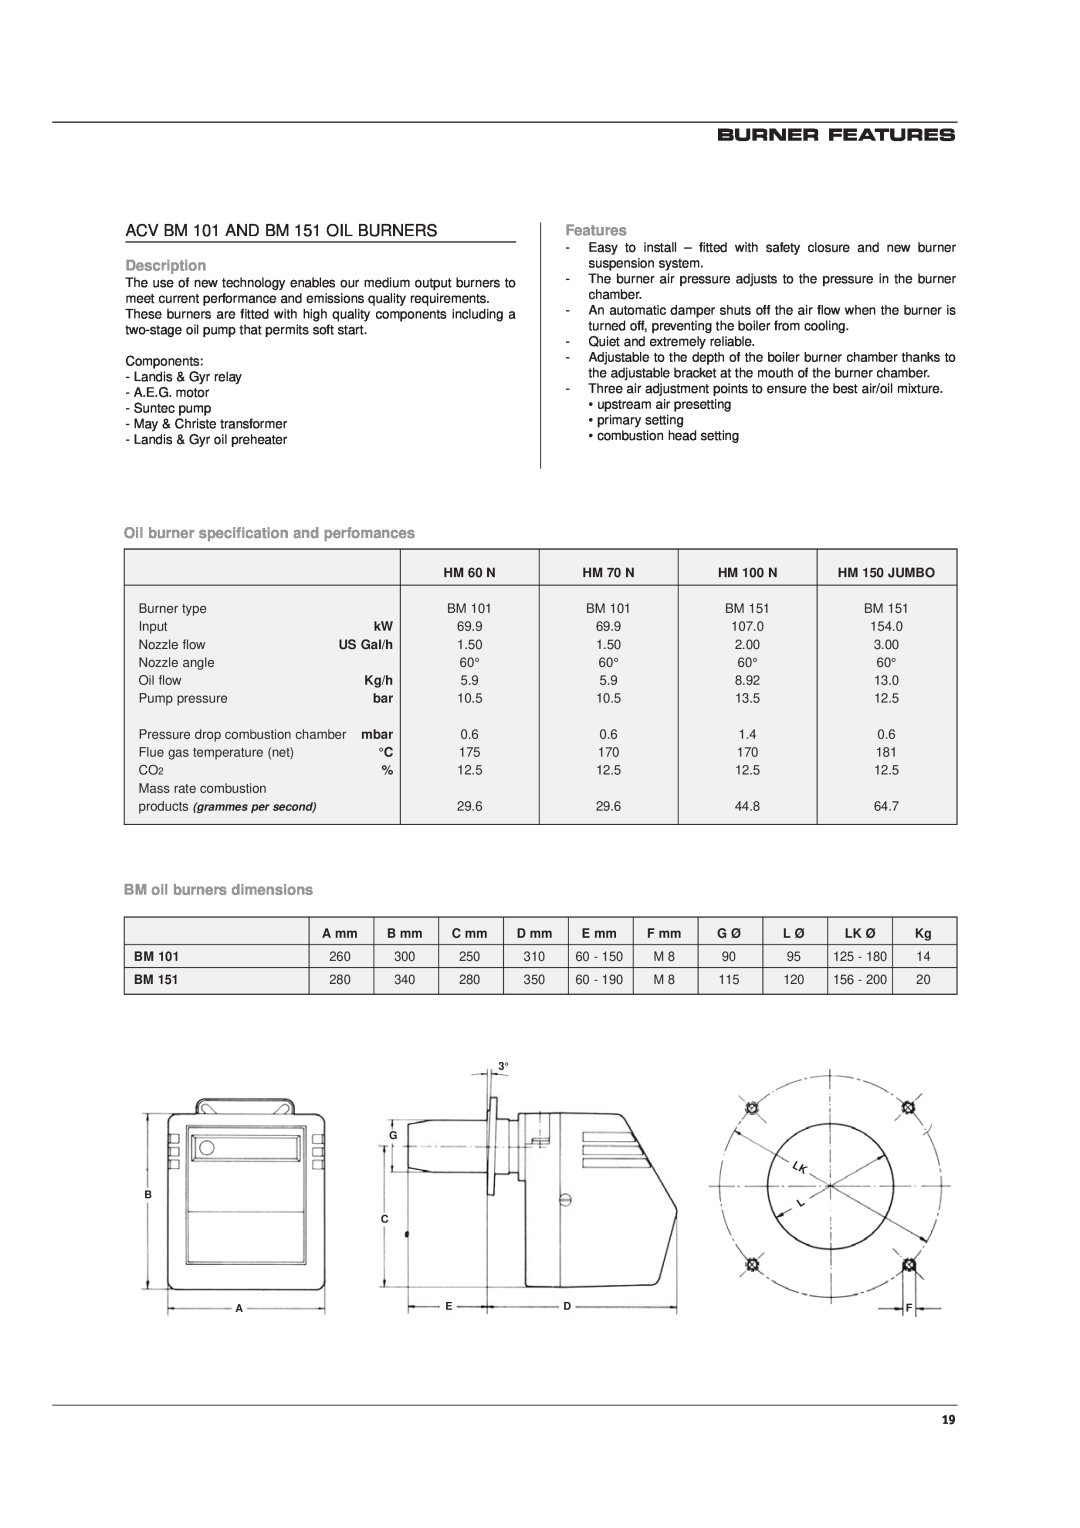 Heatmaster HM 60 N, 70 N Burner Features, Description, Oil burner specification and perfomances, BM oil burners dimensions 